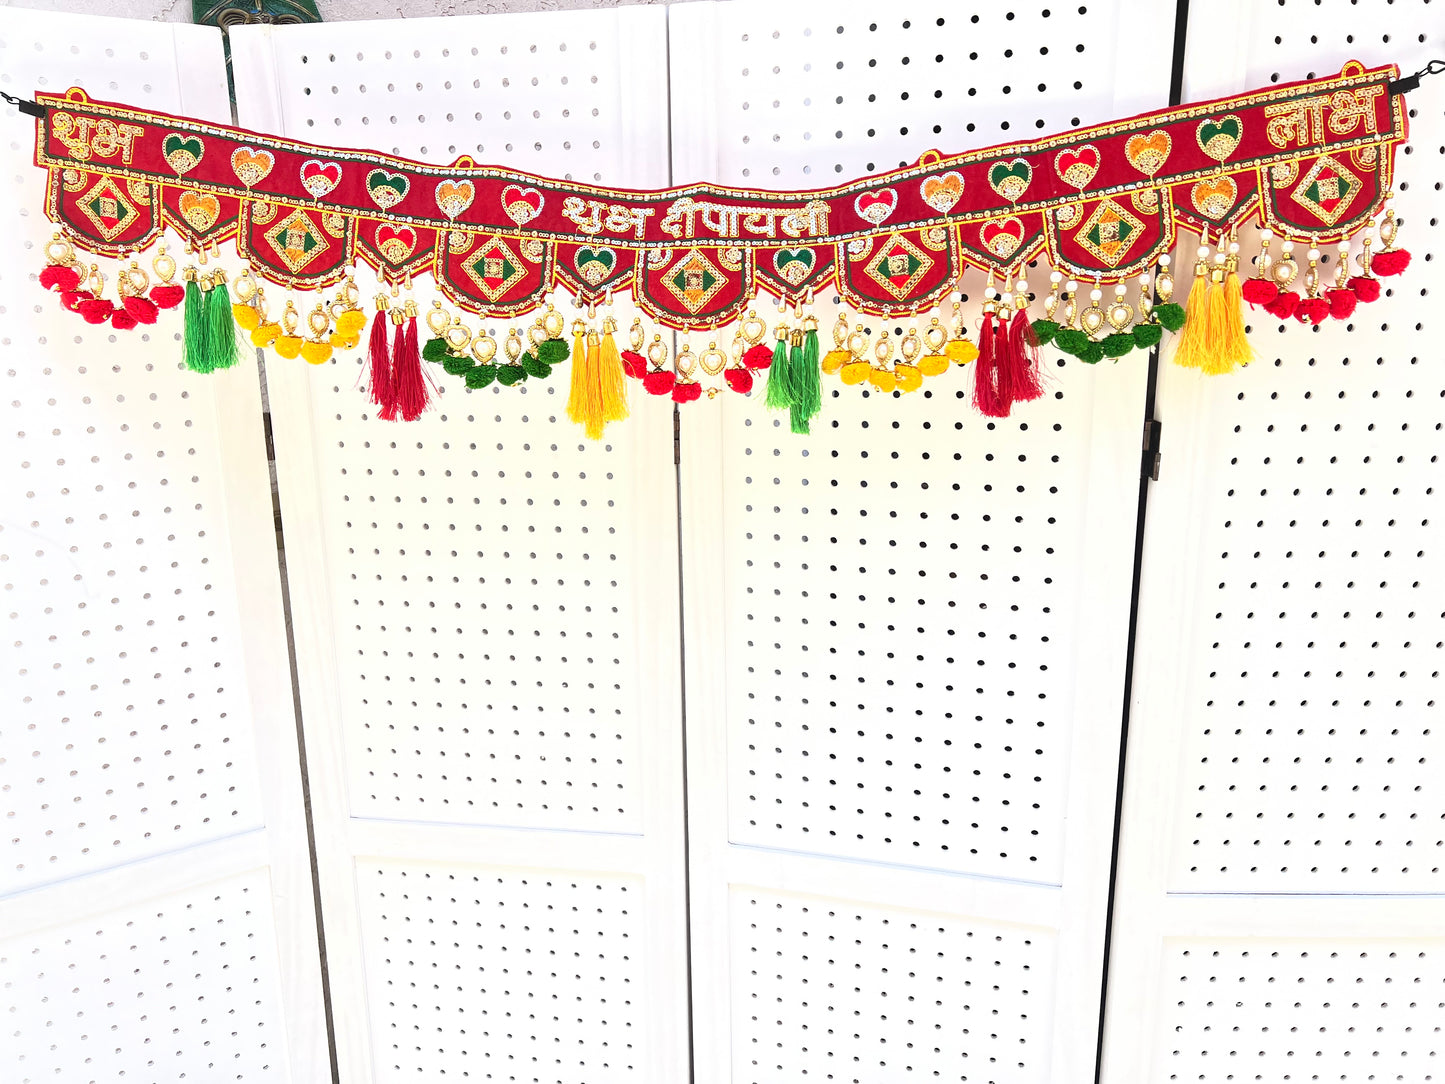 Shubh Labh Shubh Diwali Toran Bandanwar Door Wall Cloth Hanging Traditional Indian Home Office Temple Pooja Deepawali Festival Decor Decoration Gifting